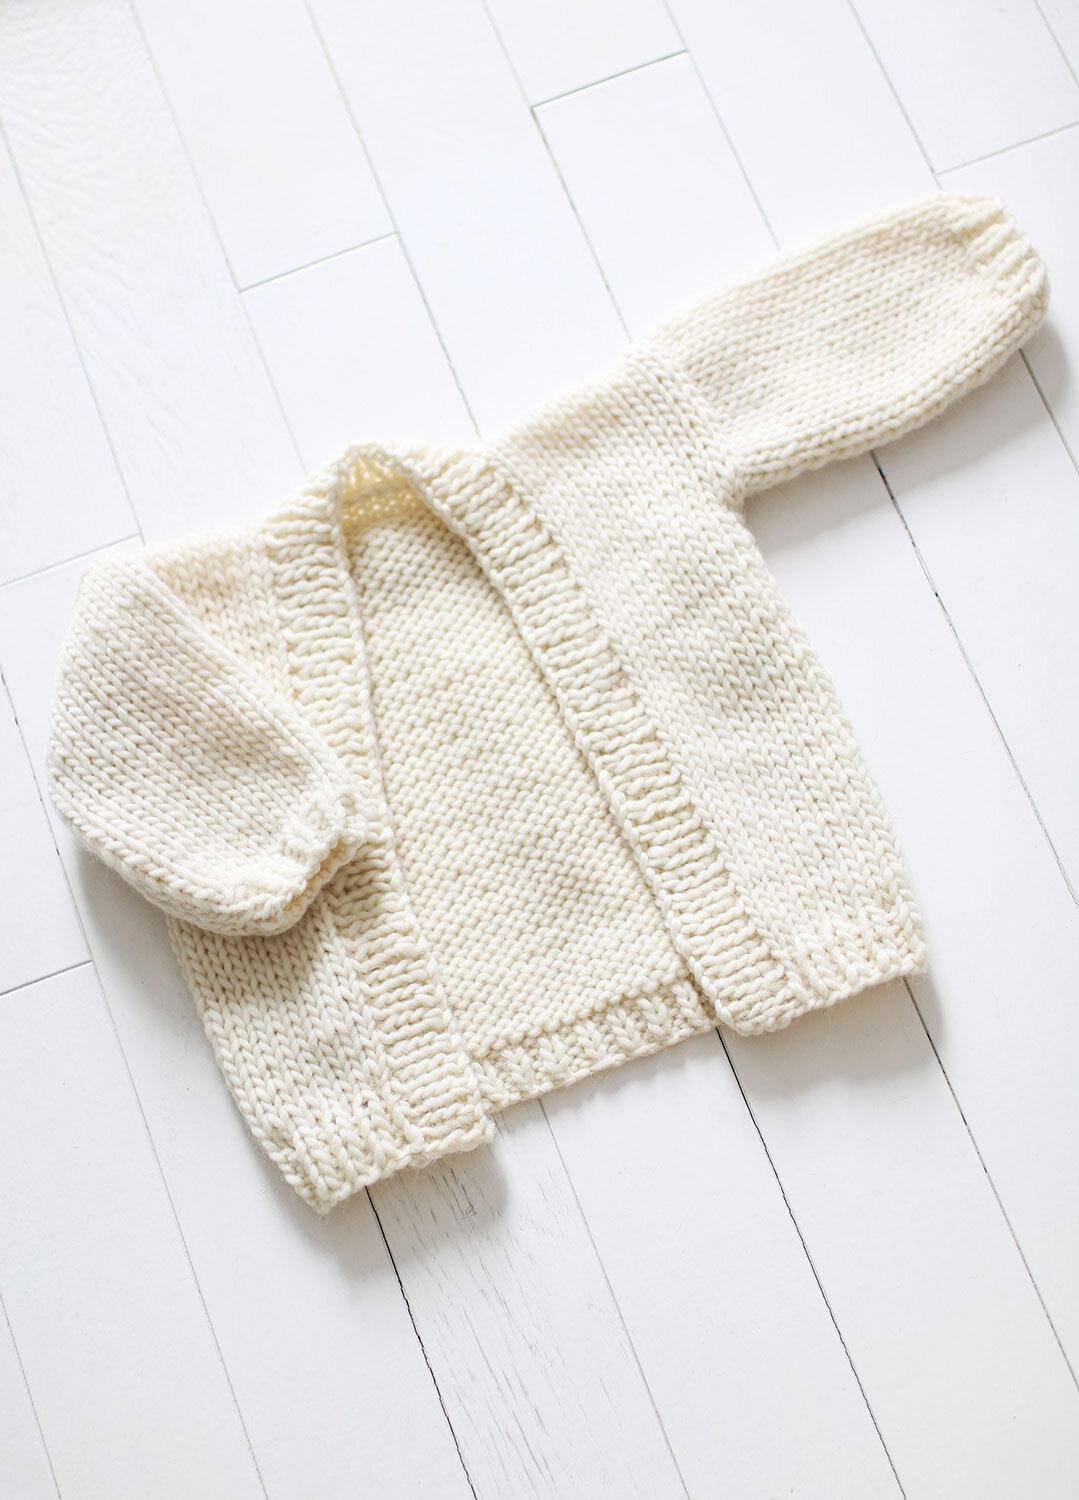 knitting-kit-lana-fina-tiny-cardigan_EN-01.jpeg